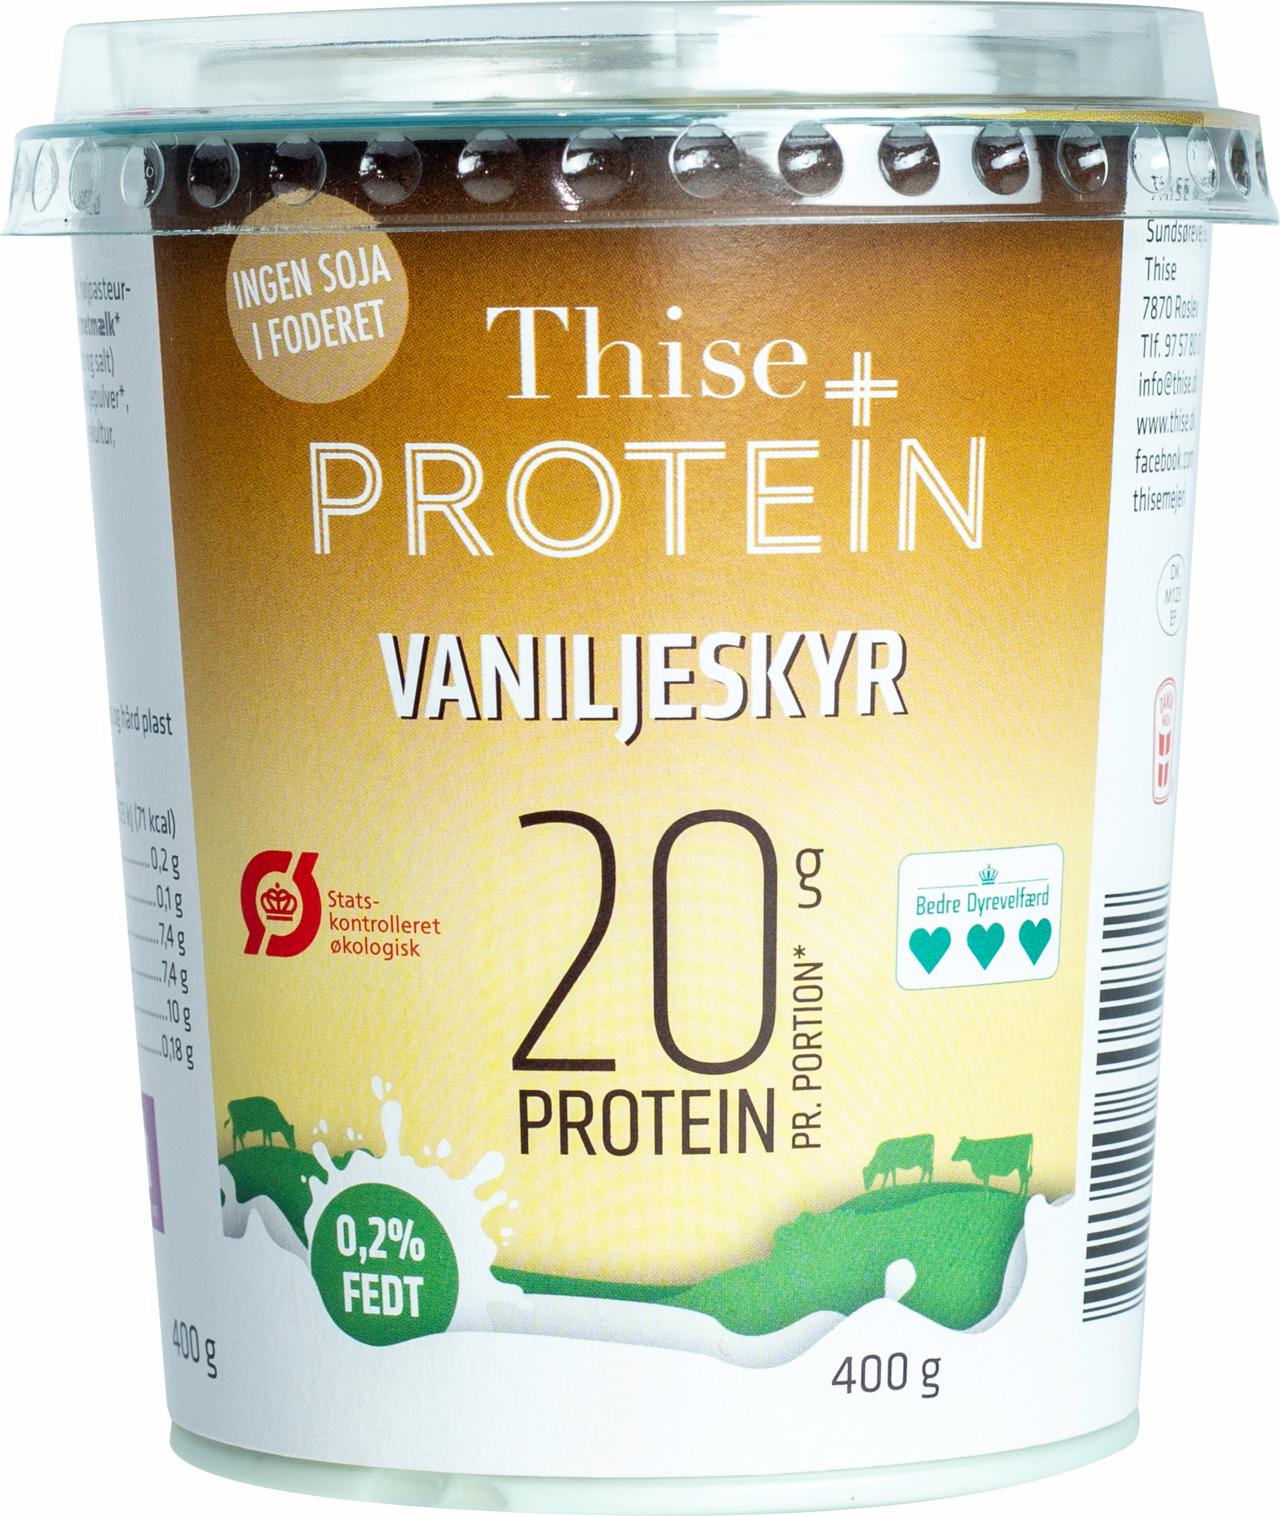 Thise Protein+ skyr vanilje 400g Laktosefri